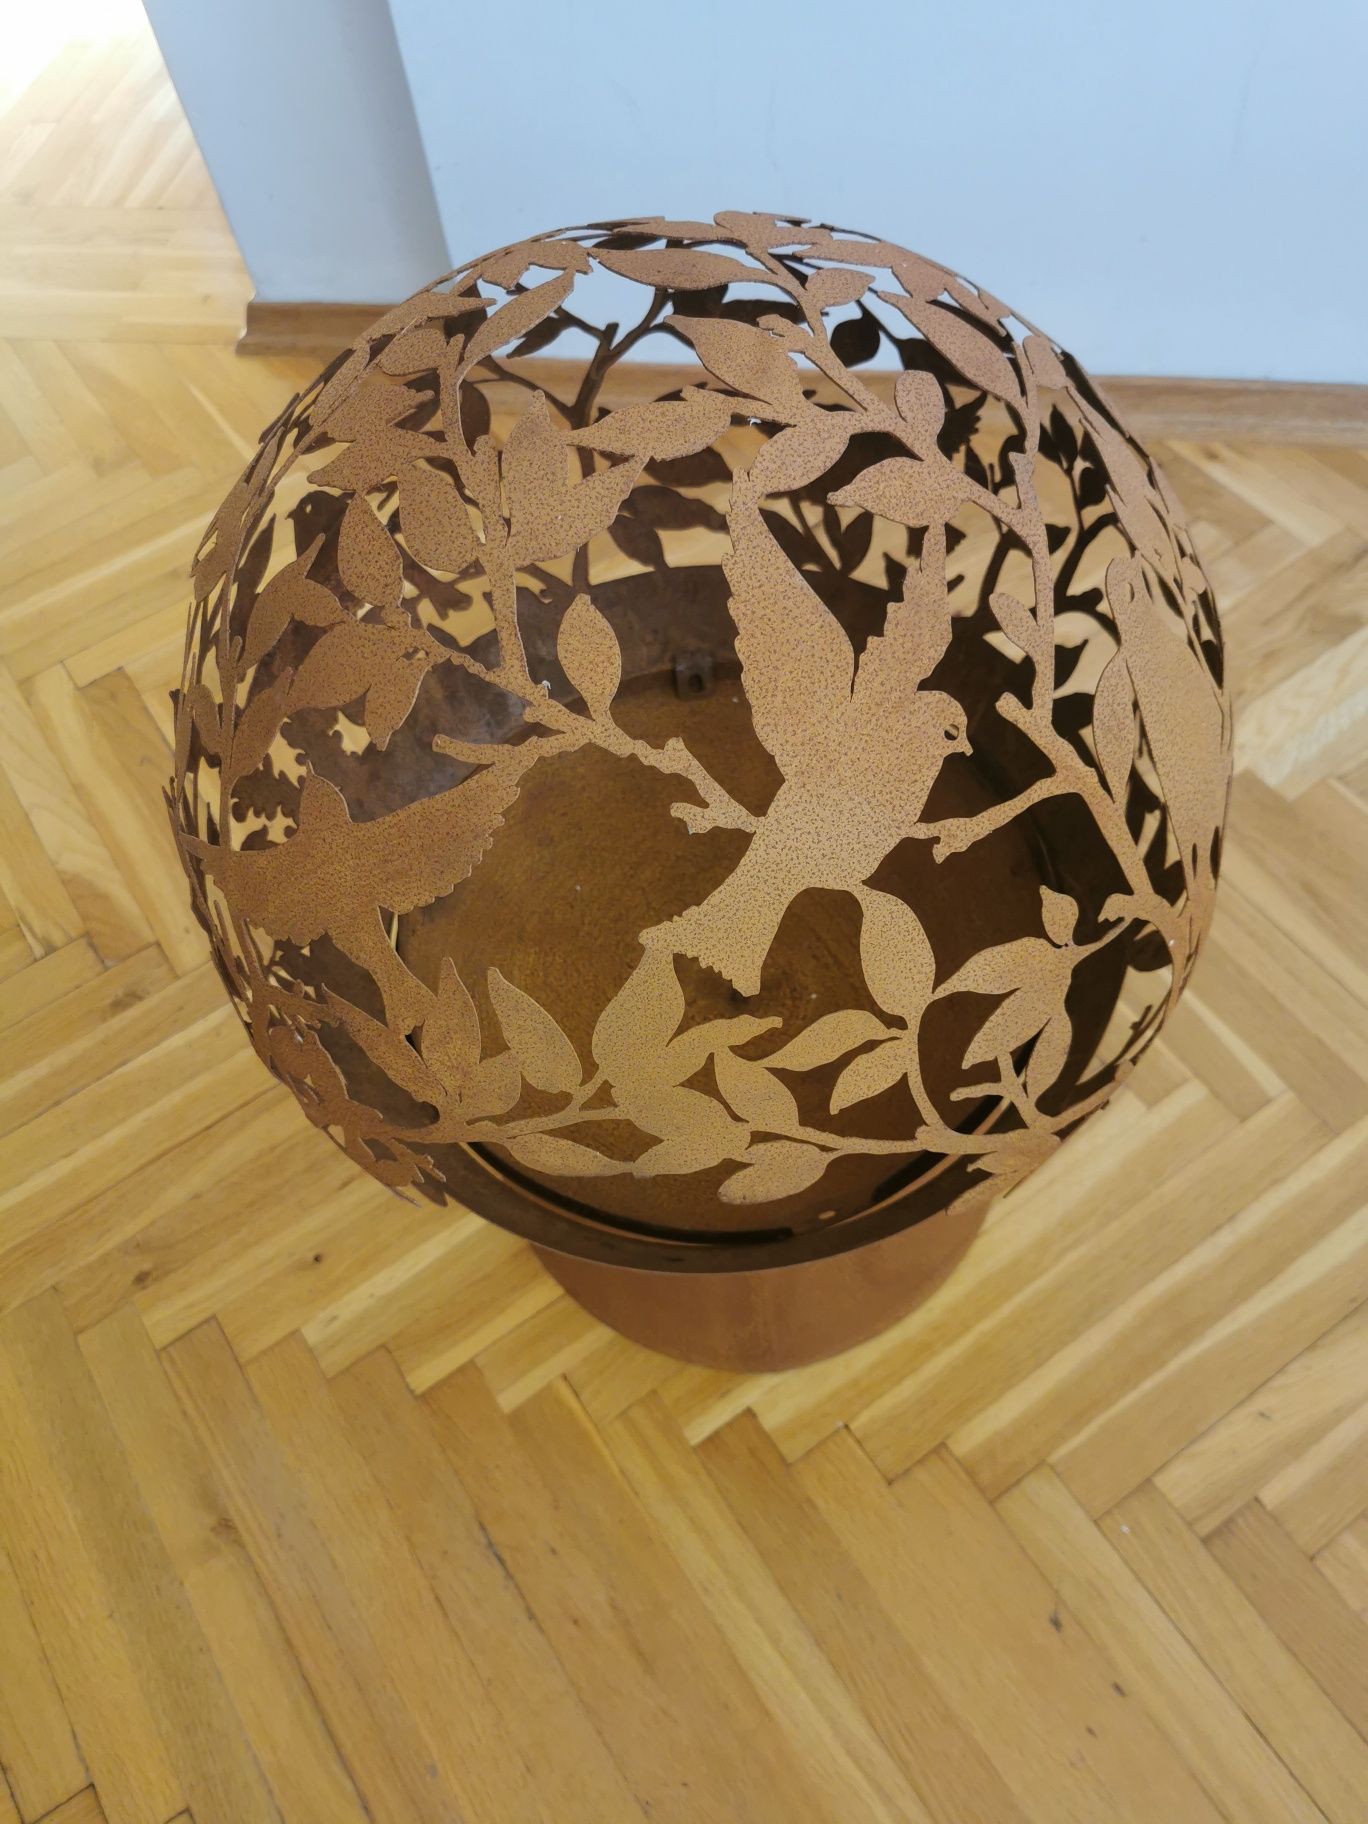 Kula paleniskowa Vasara Oxidised fire globe